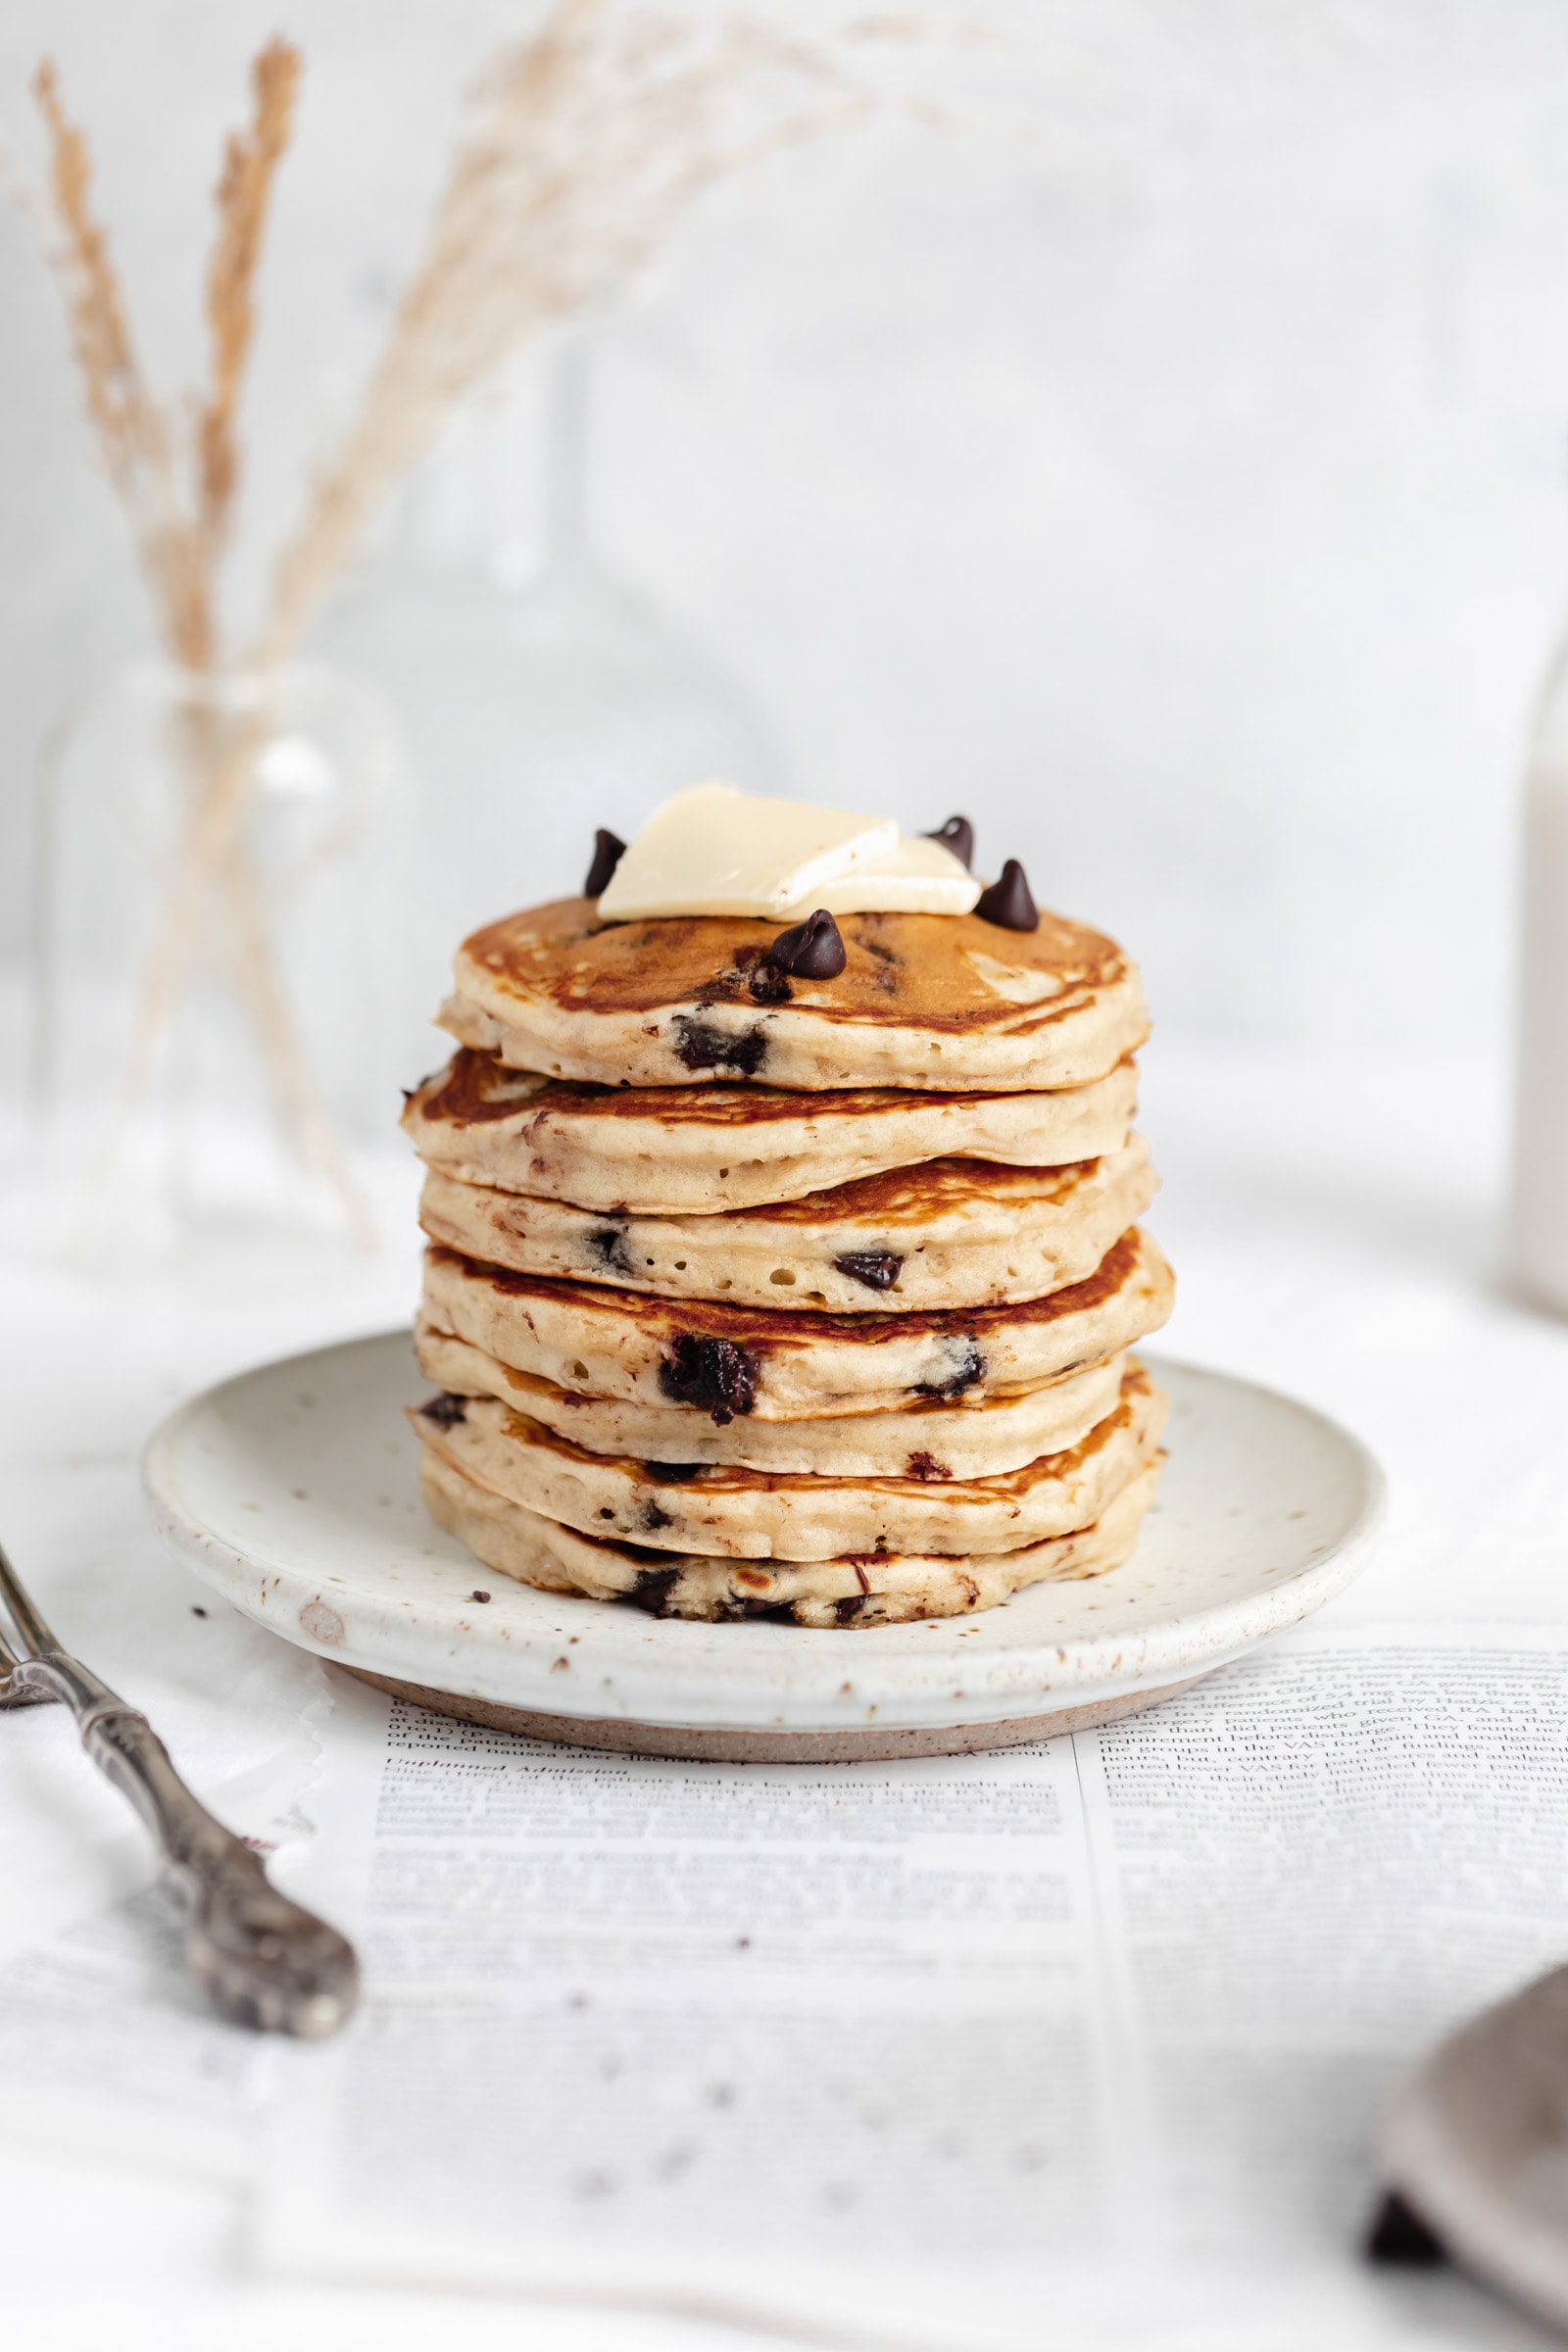 Chocolate Chip Pancakes - The BEST sweet breakfast treat - Broma Bakery